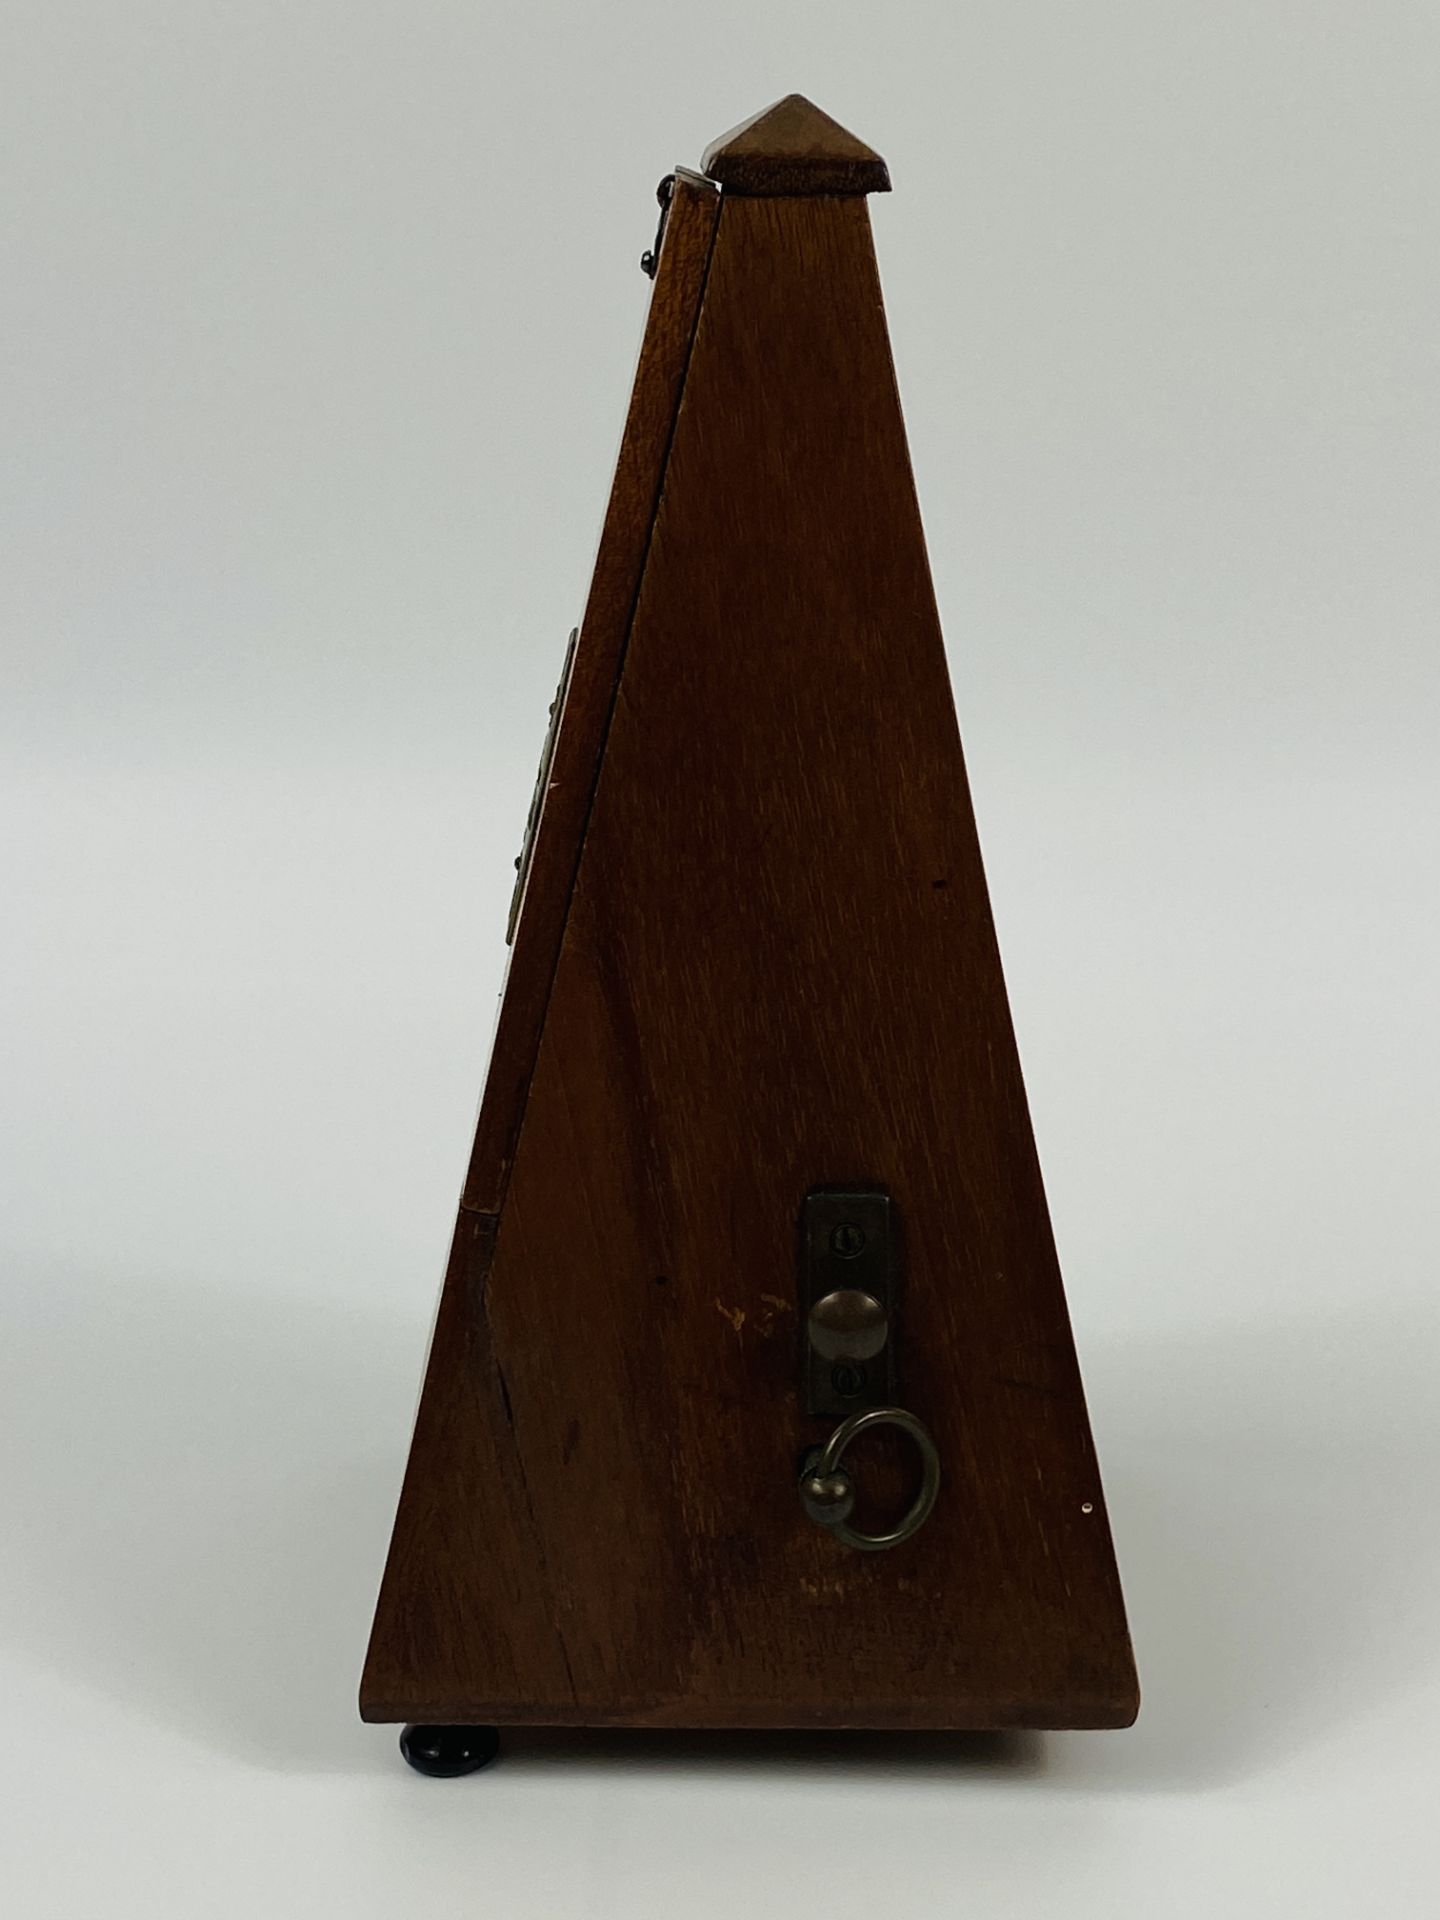 Paquet metronome - Image 4 of 6